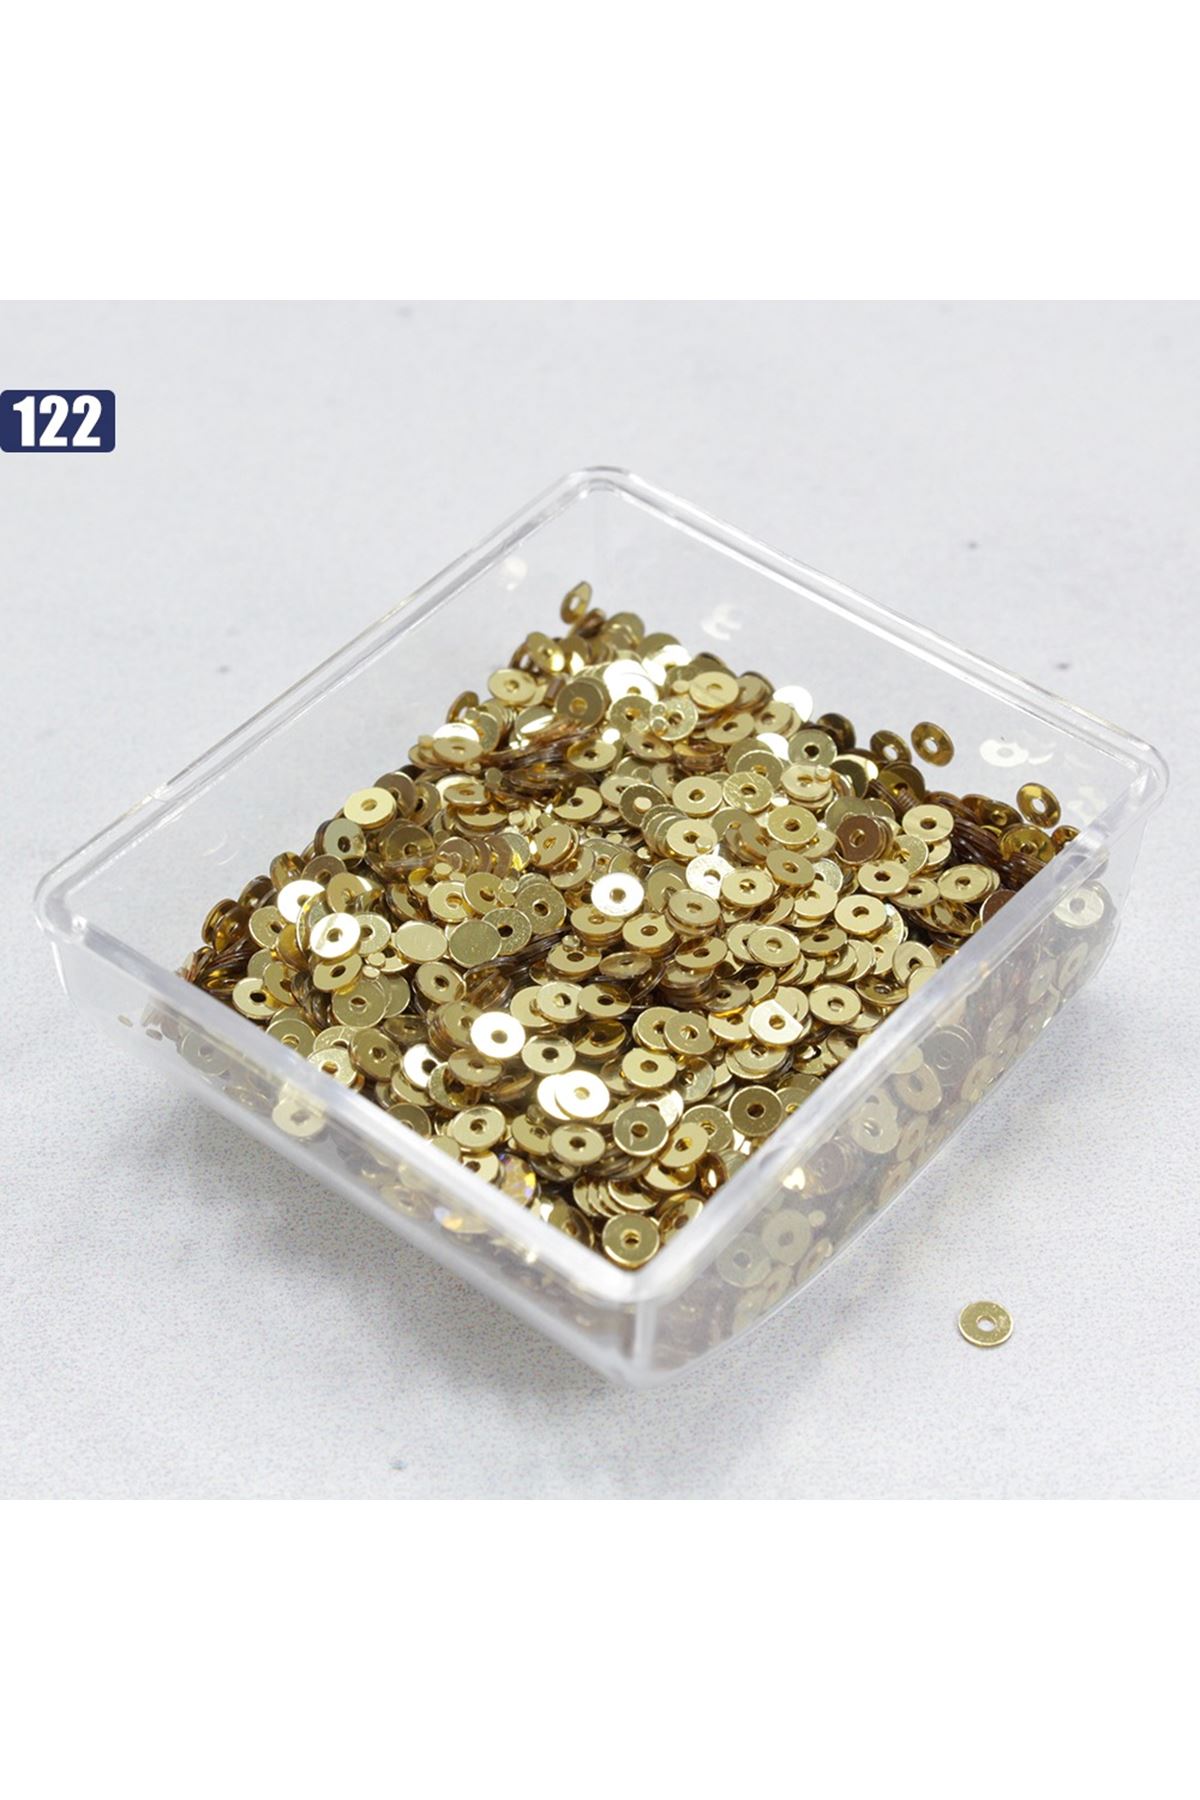 Pul 10 gram - 122